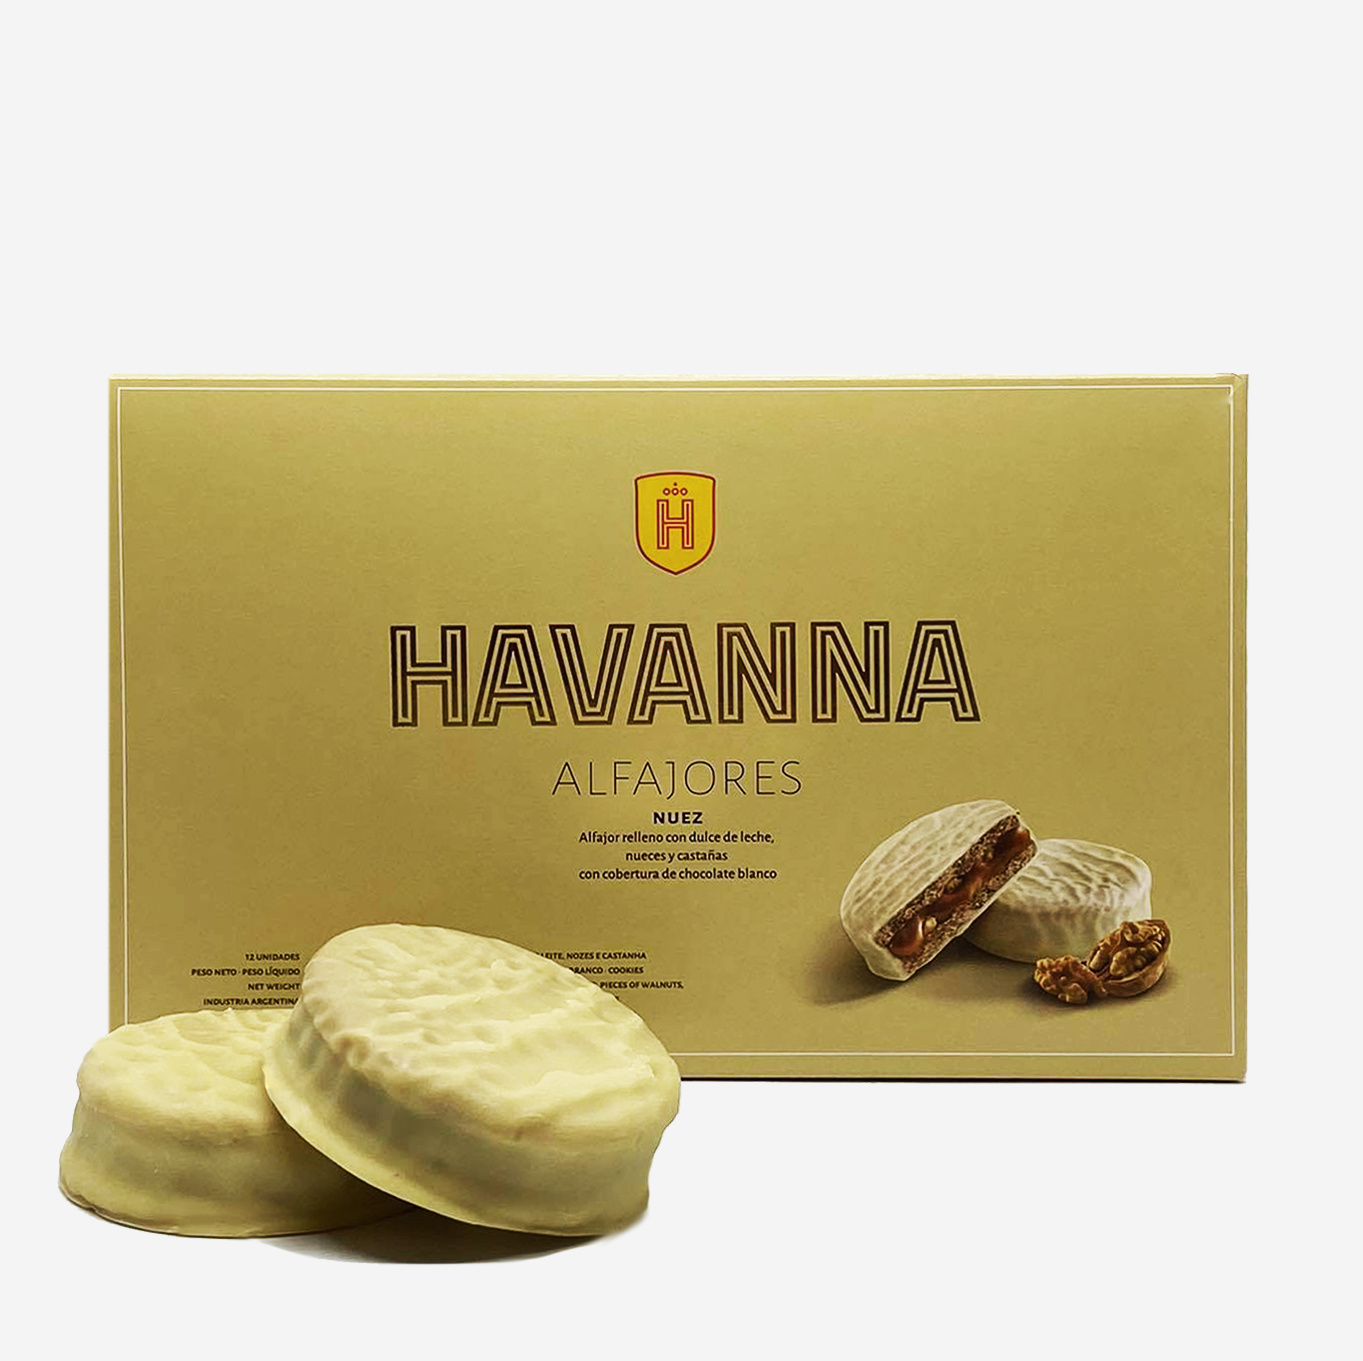 HAVANNA ALFAJORES NUEZ WITH NUTS - 12 - ARGENTINA buy online